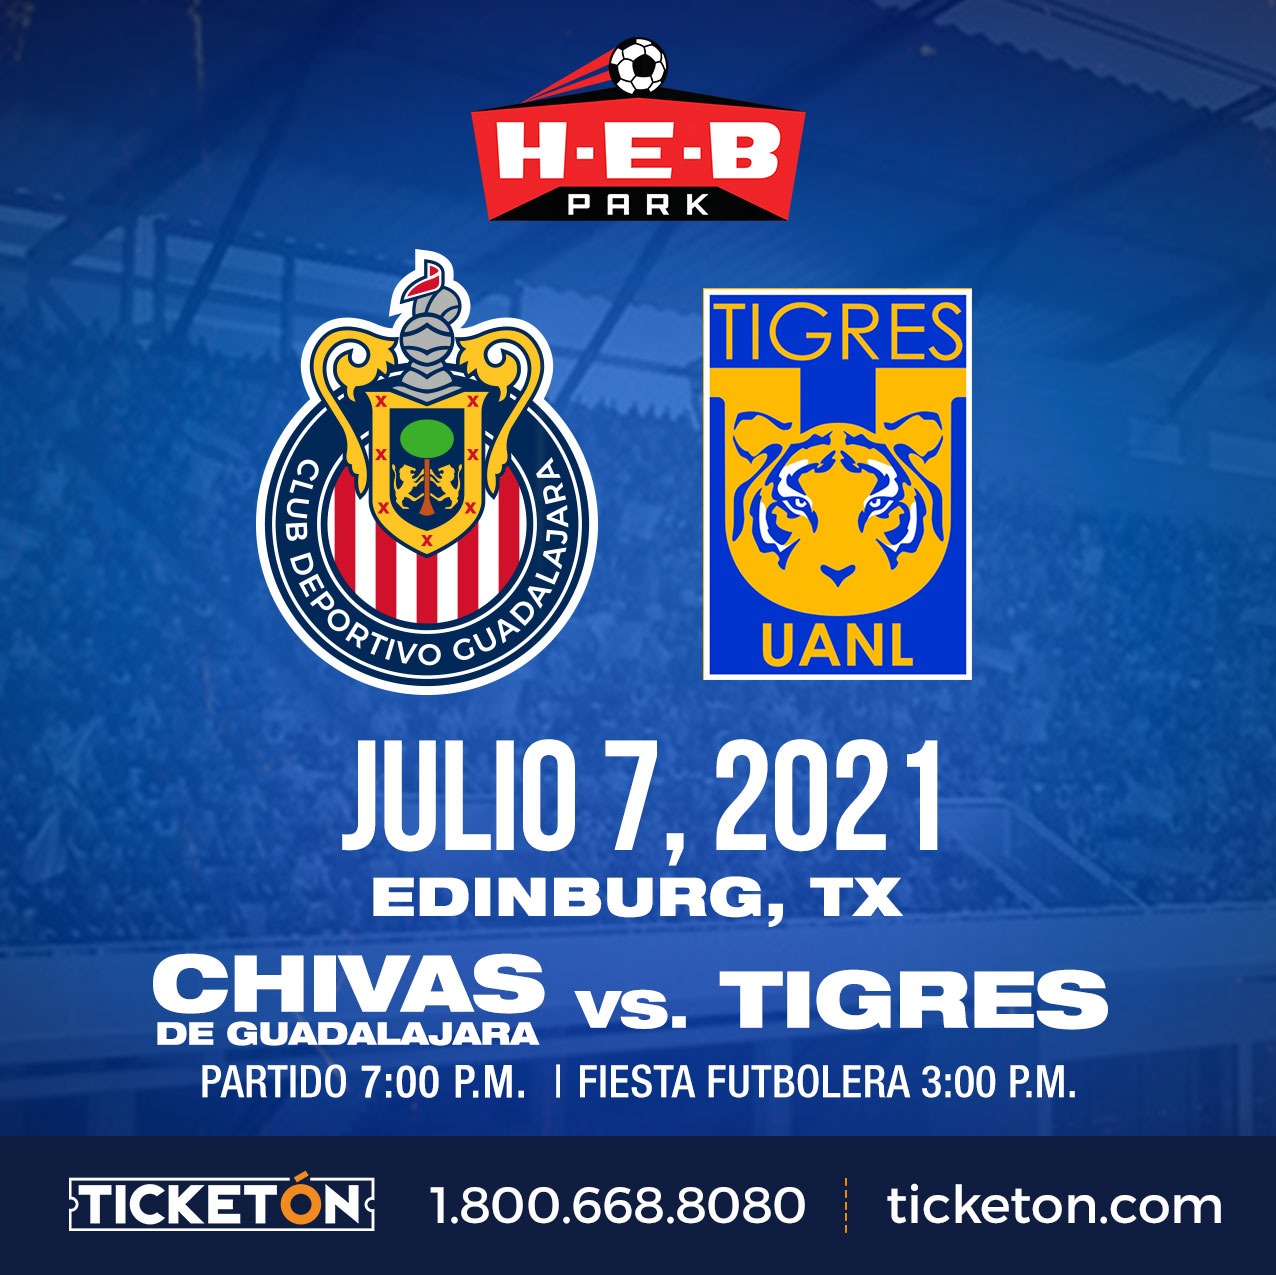 Chivas de Guadalajara vs Tigres HEB Park Tickets Boletos I Edinburg